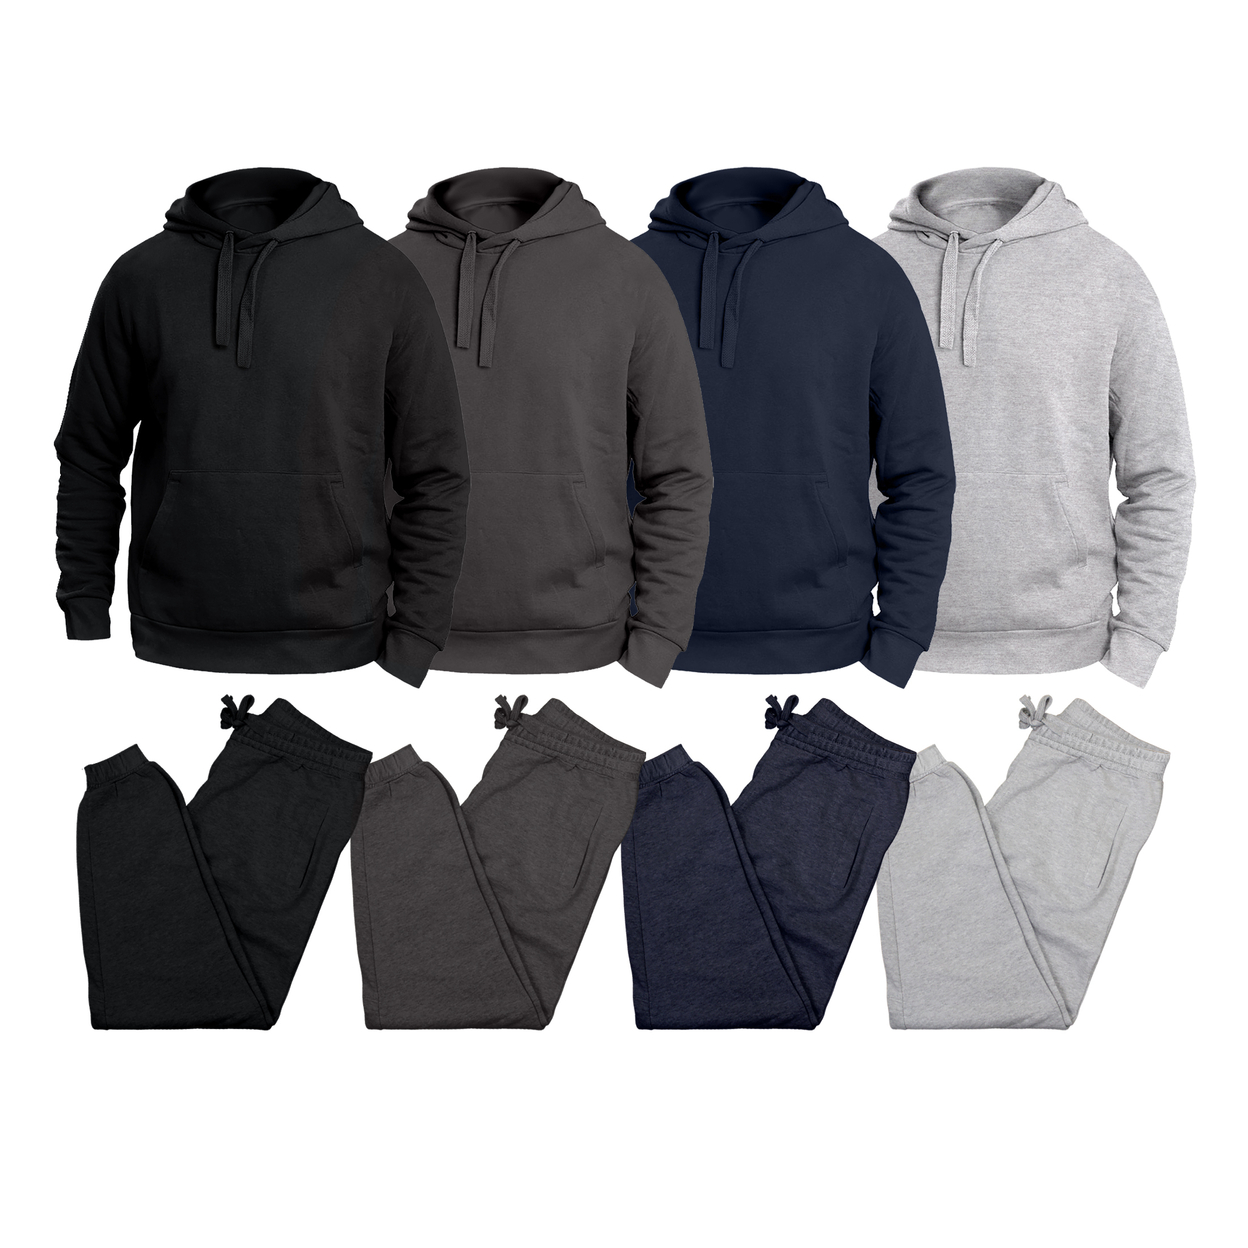 Multi-Pack: Big & Tall Men's Winter Warm Cozy Athletic Fleece Lined Multi-Pocket Cargo Sweatsuit - Grey, 1-pack, X-large